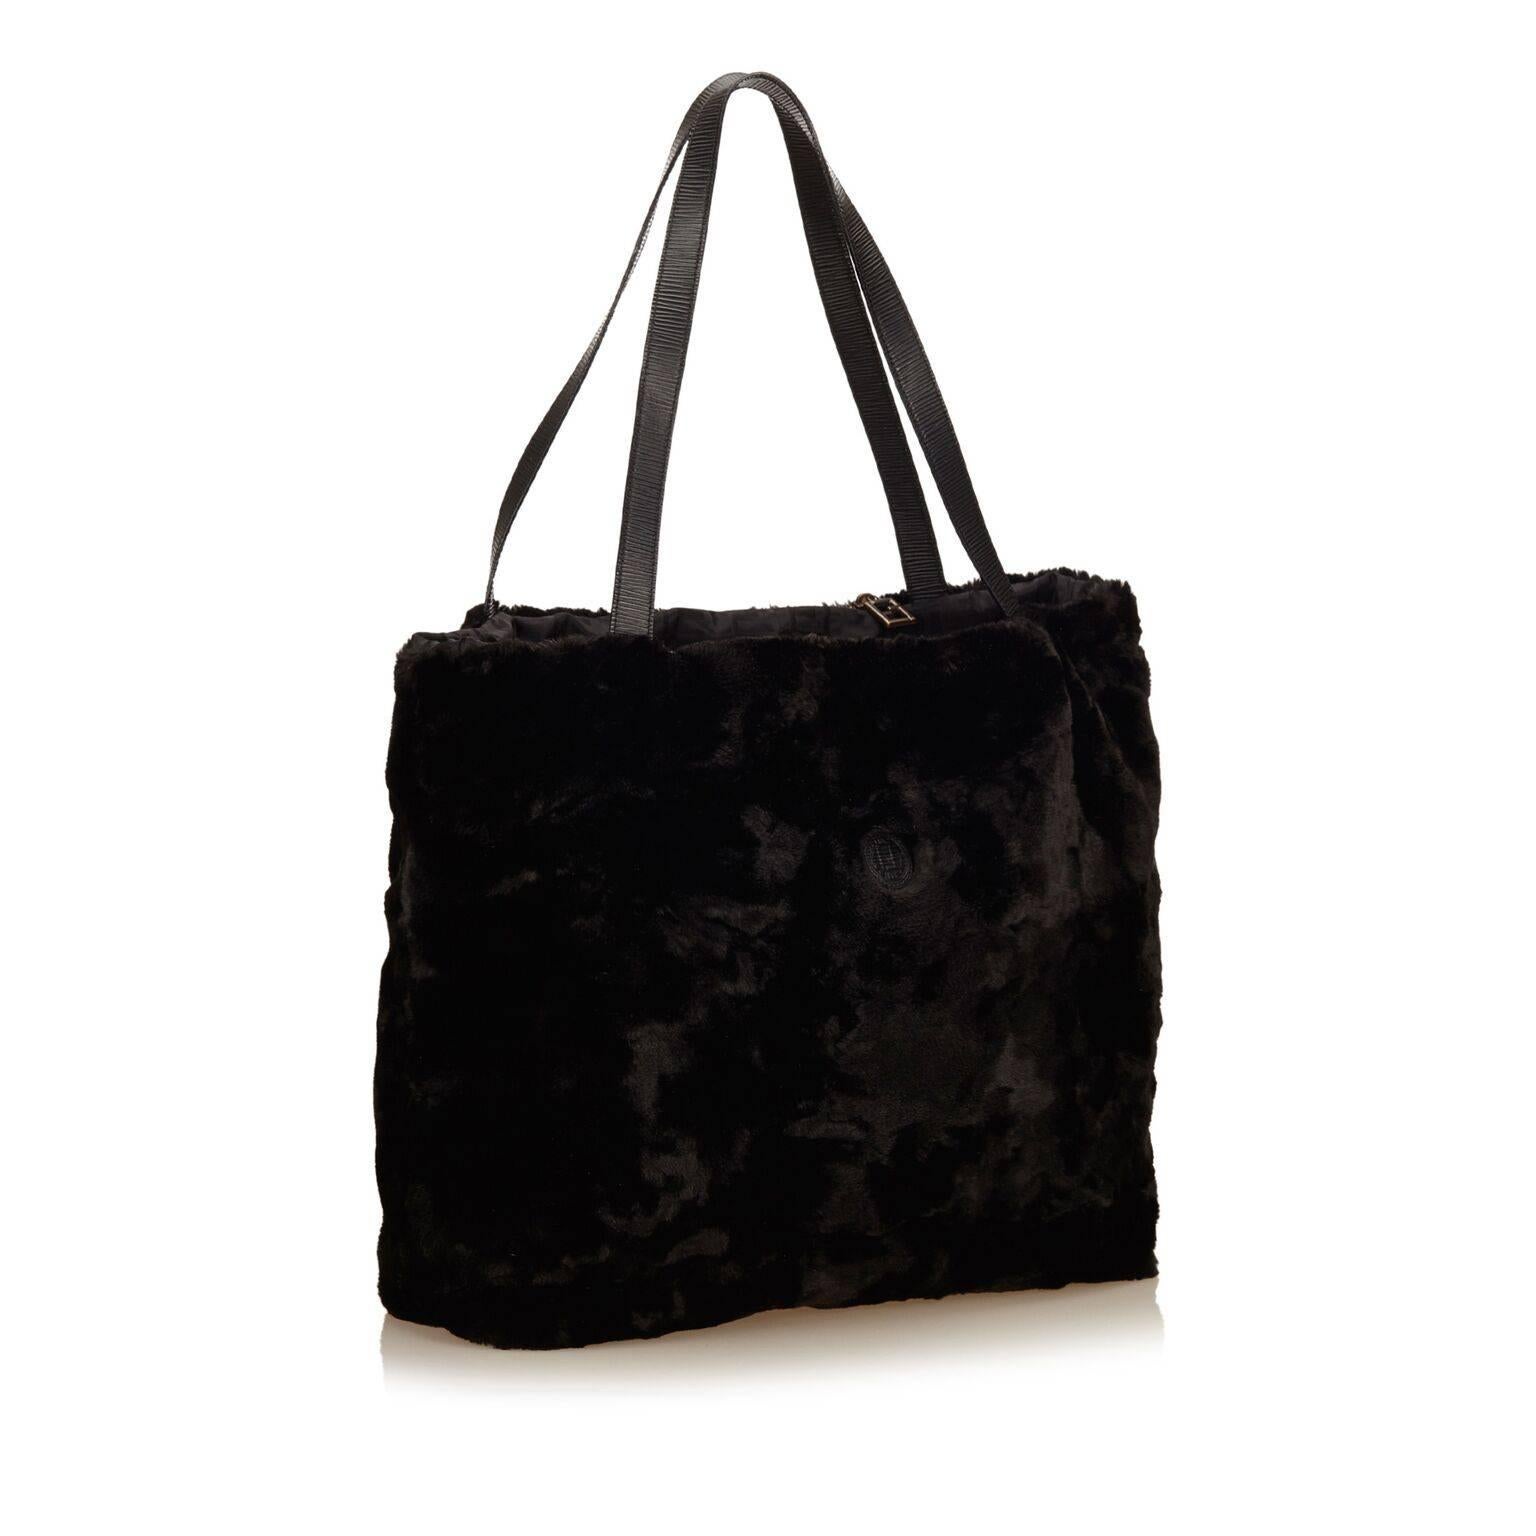 Product details:  Black fur tote bag by Fendi.  Dual leather shoulder straps.  Open top.  Lined interior.  22